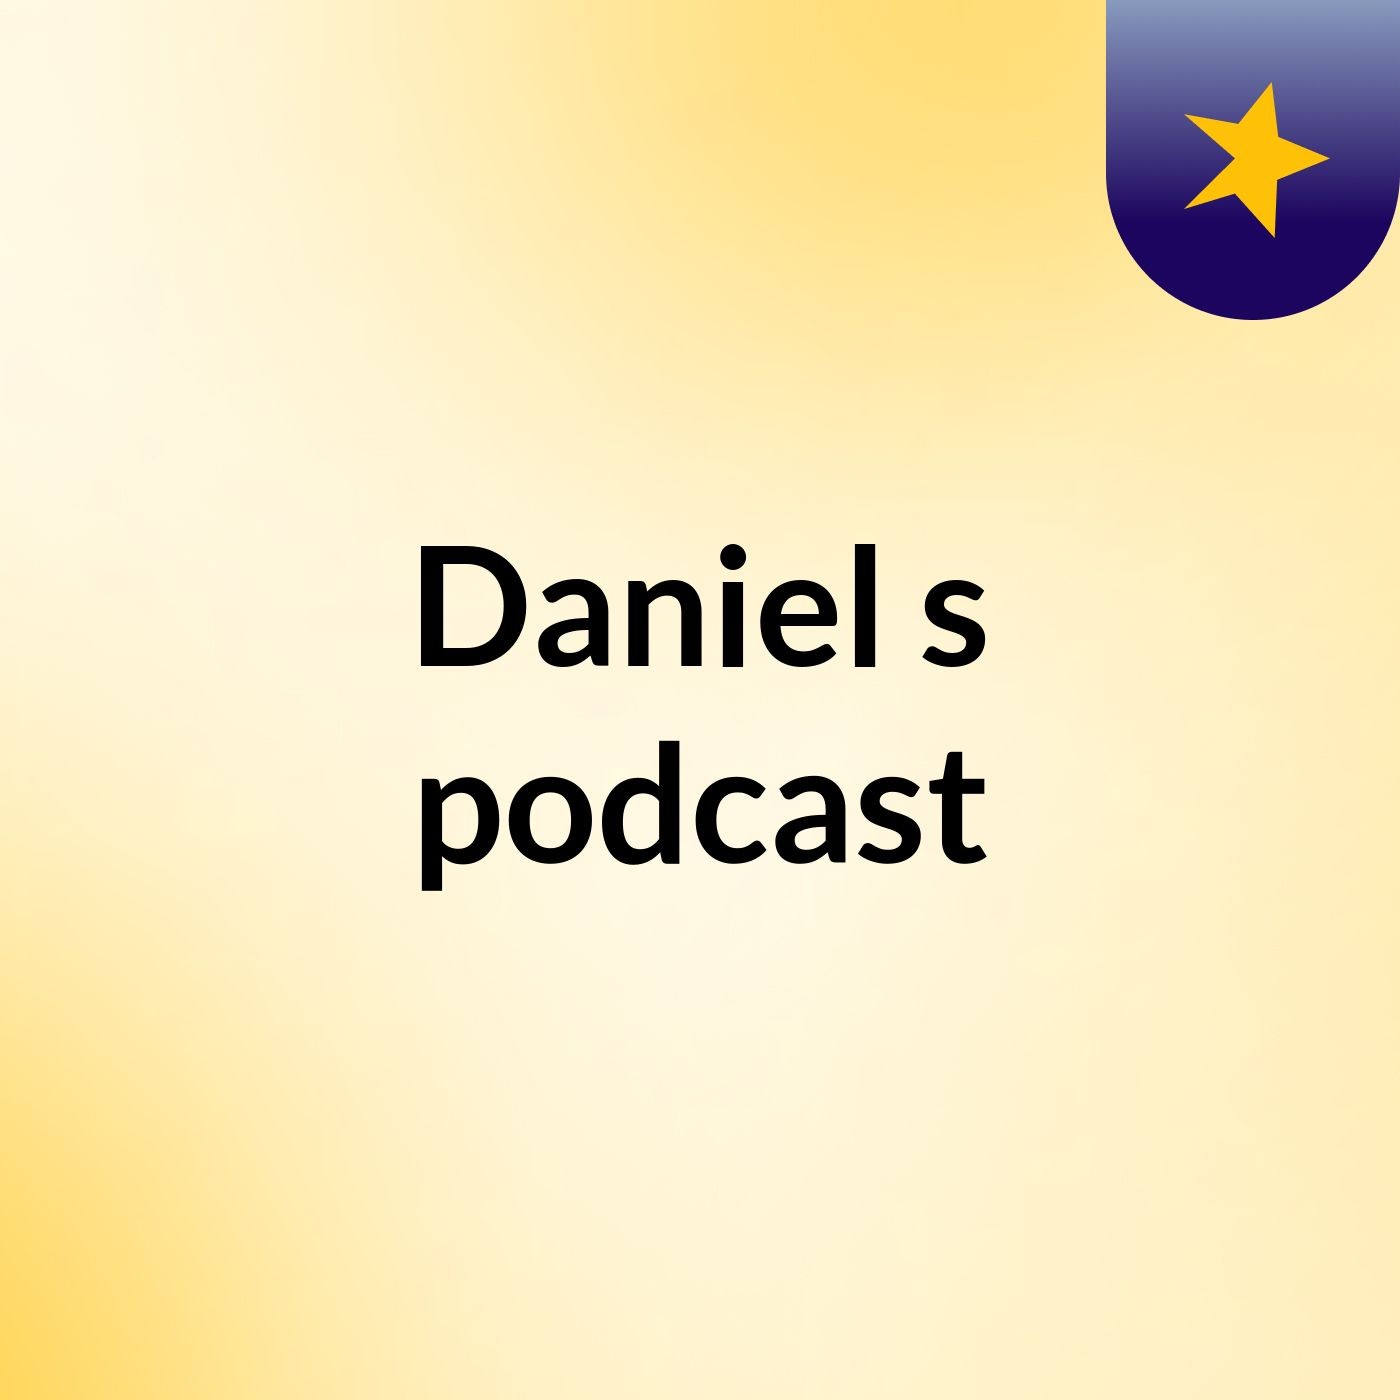 Daniel's podcast